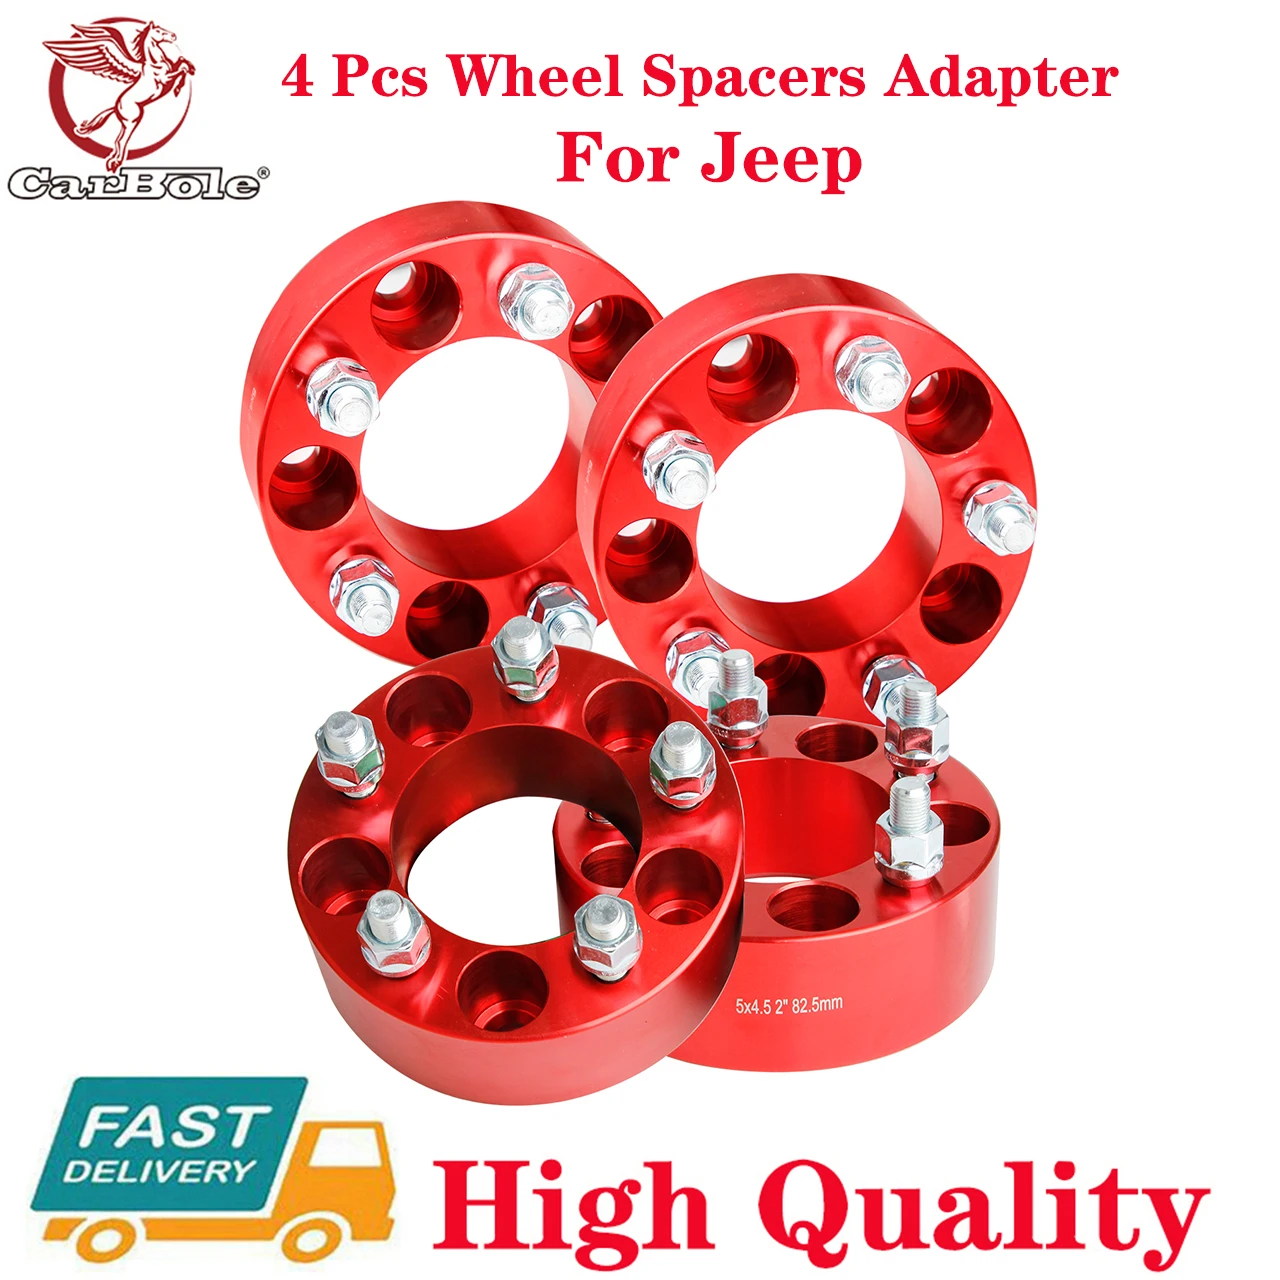 

4 Pcs 2" Wheel Spacers Adapters 5x4.5 Lug Hubcentric Adapters For Jeep Wrangler TJ, YJ, XJ, KJ, KK, ZJ, MJ Grand Cherokee ZJ